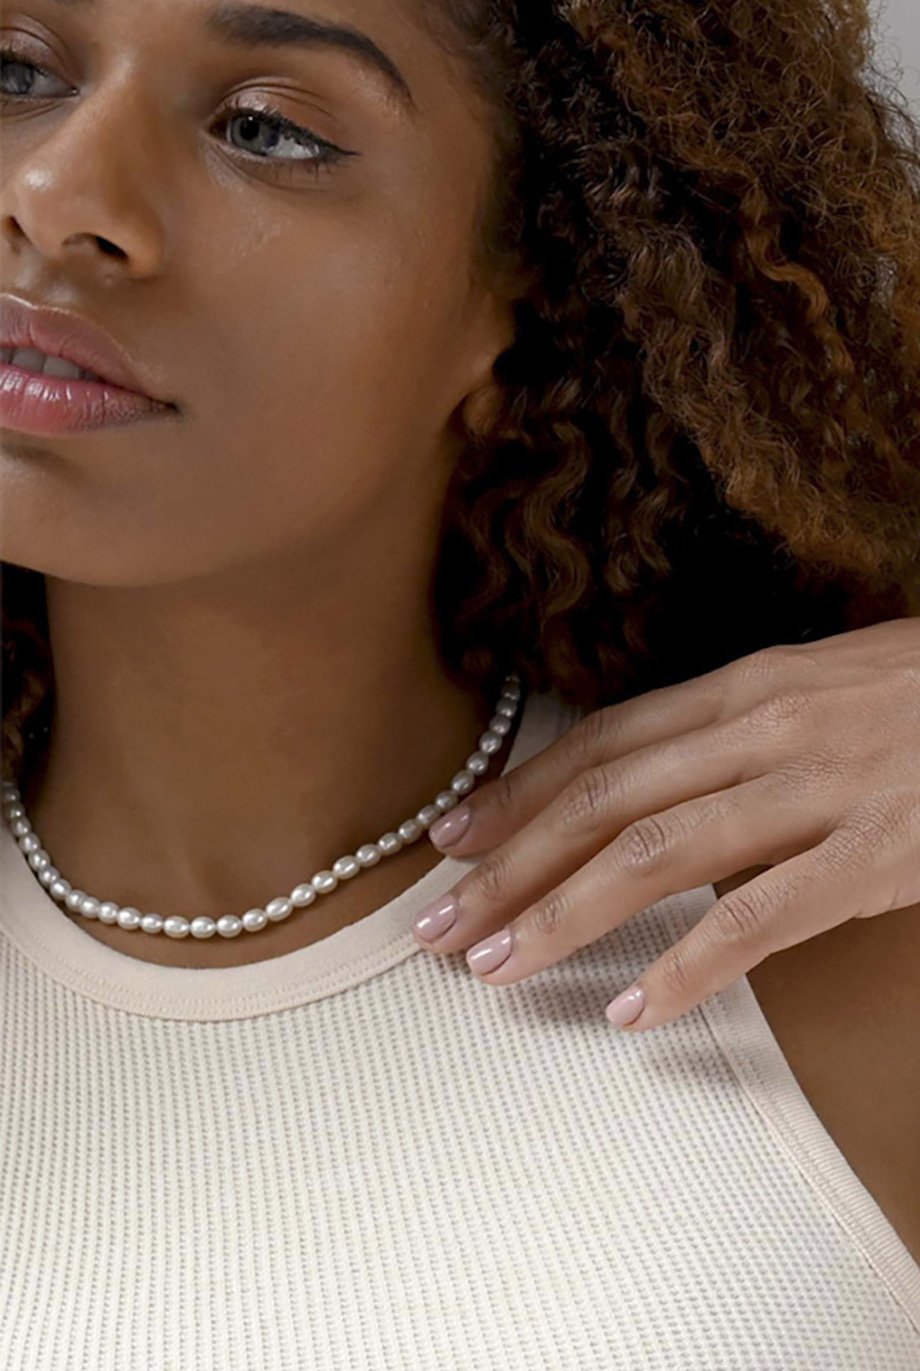 Wild Keishi Pearl Necklace – Deana Rose Jewelry, LLC